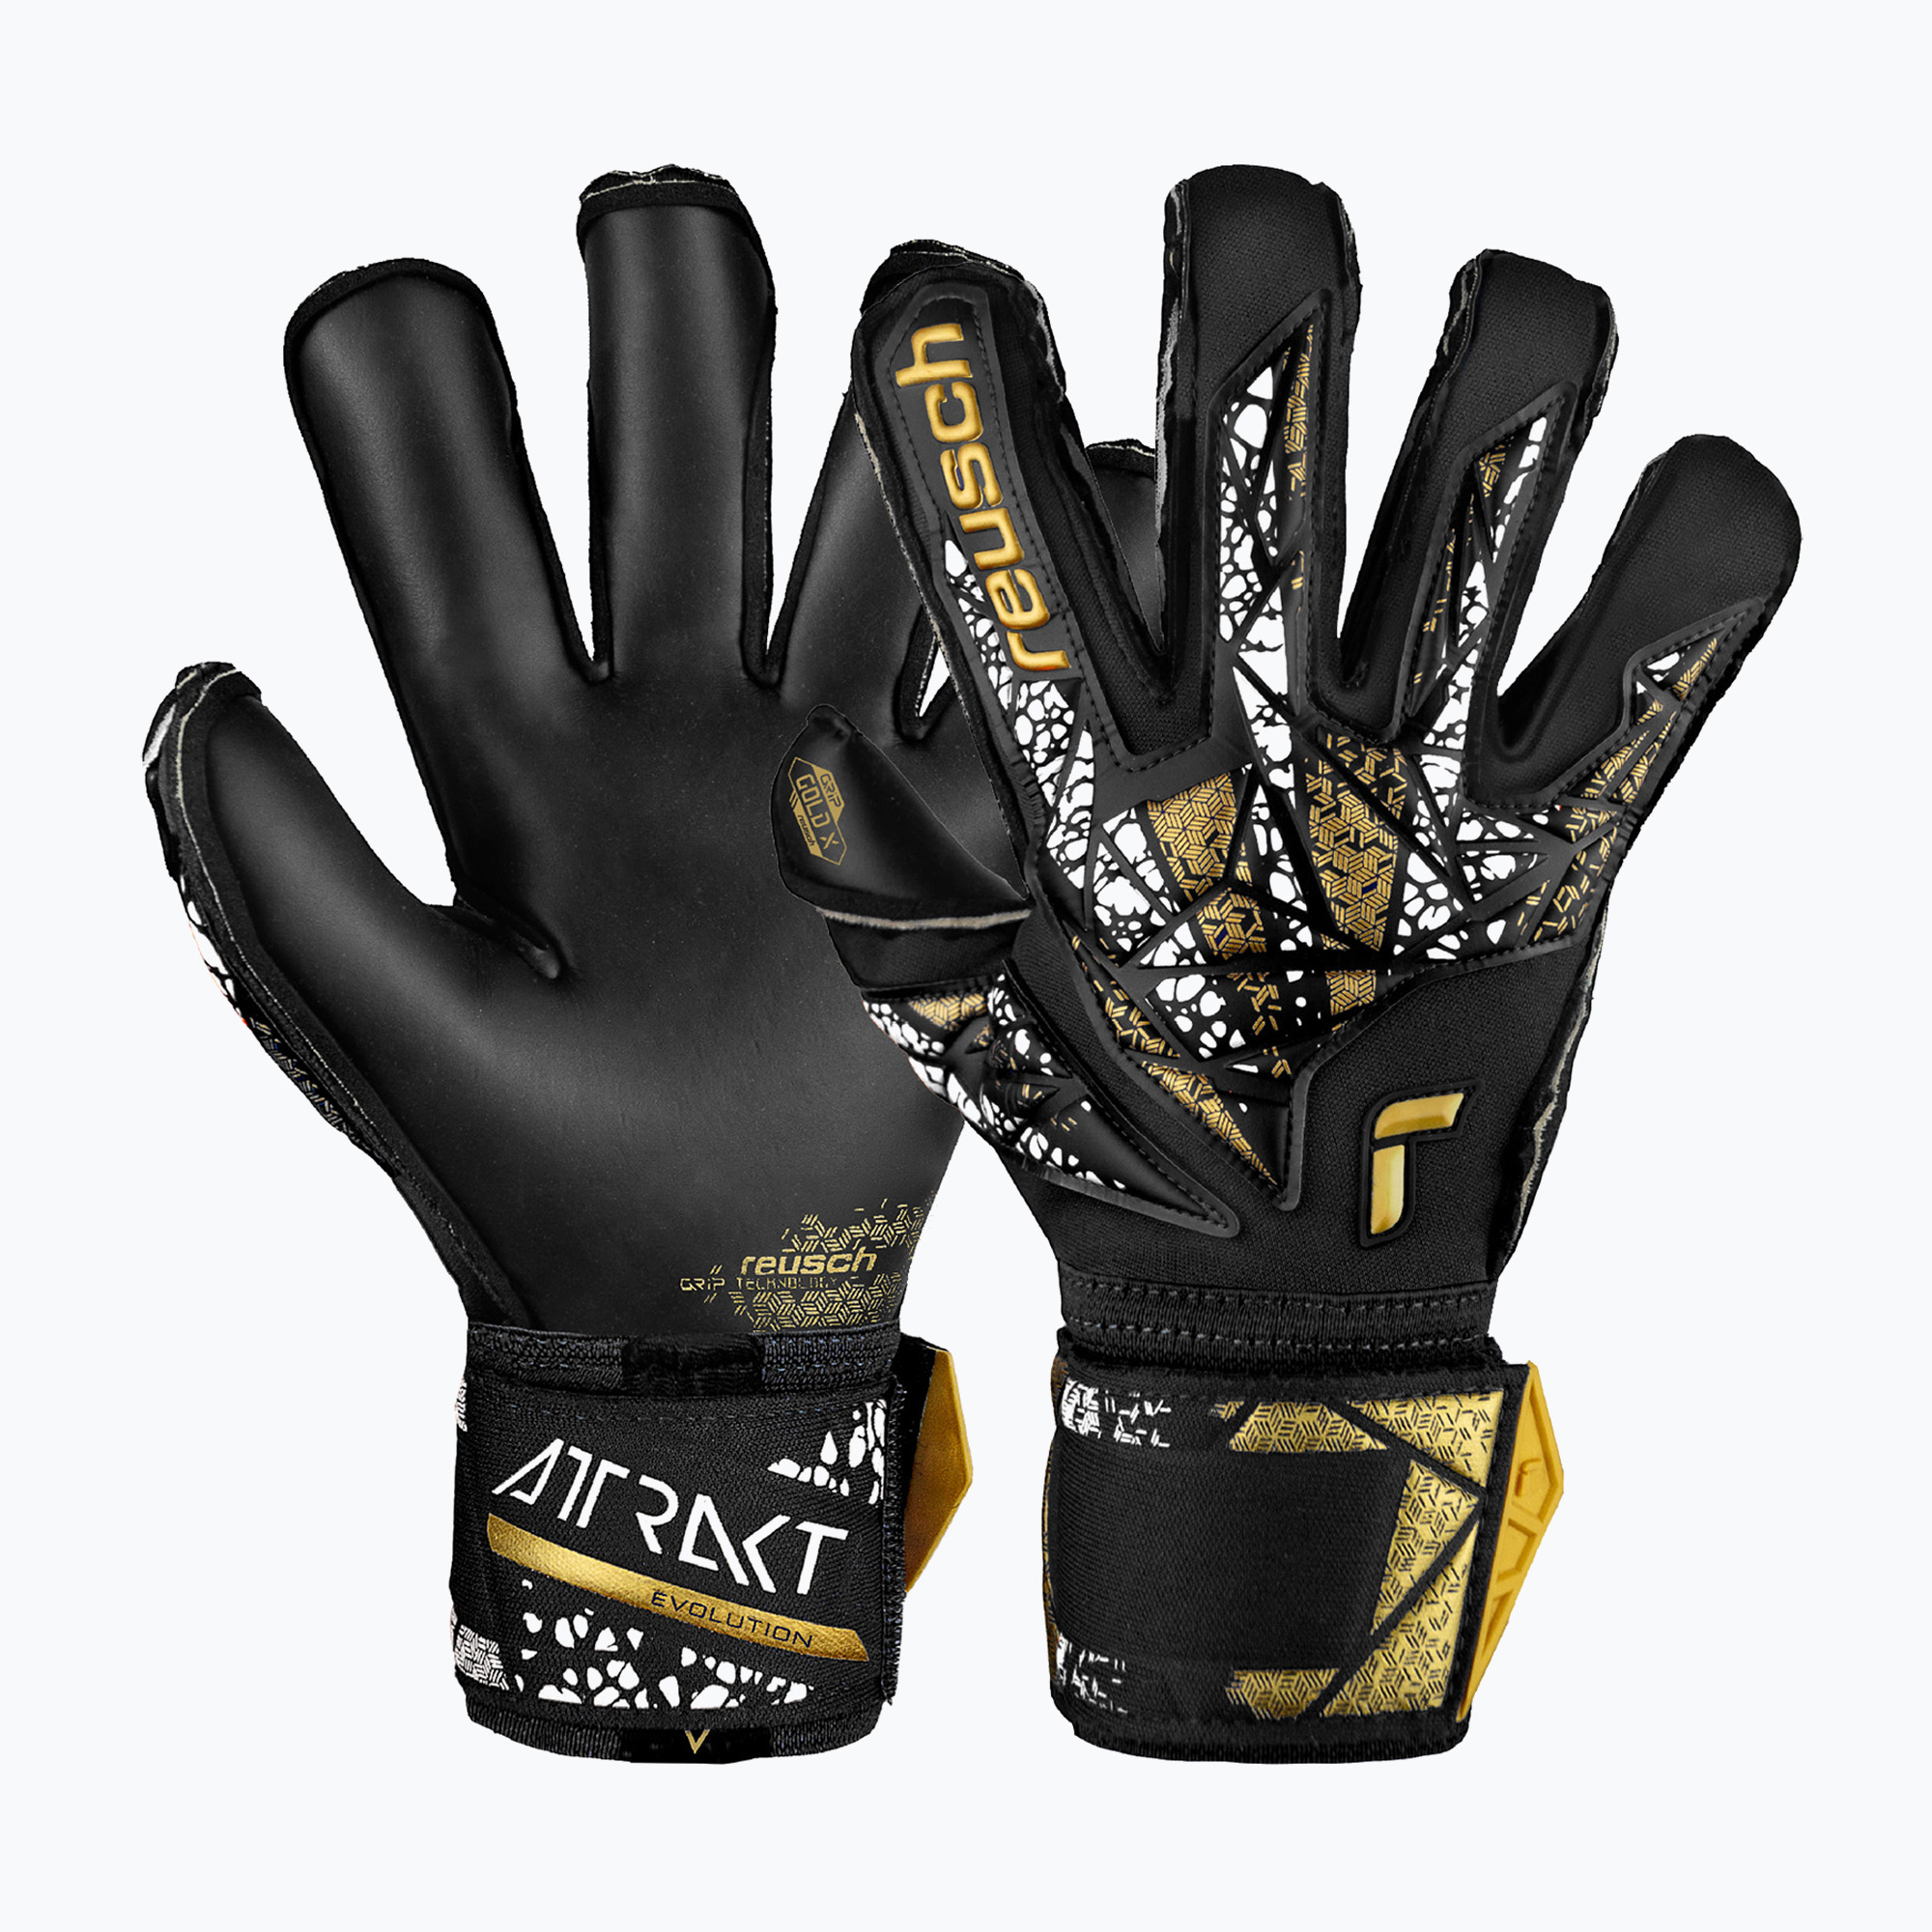 Reusch Attrakt Gold X Evolution Cut Finger Support вратарски ръкавици черни/златни/бели/черни